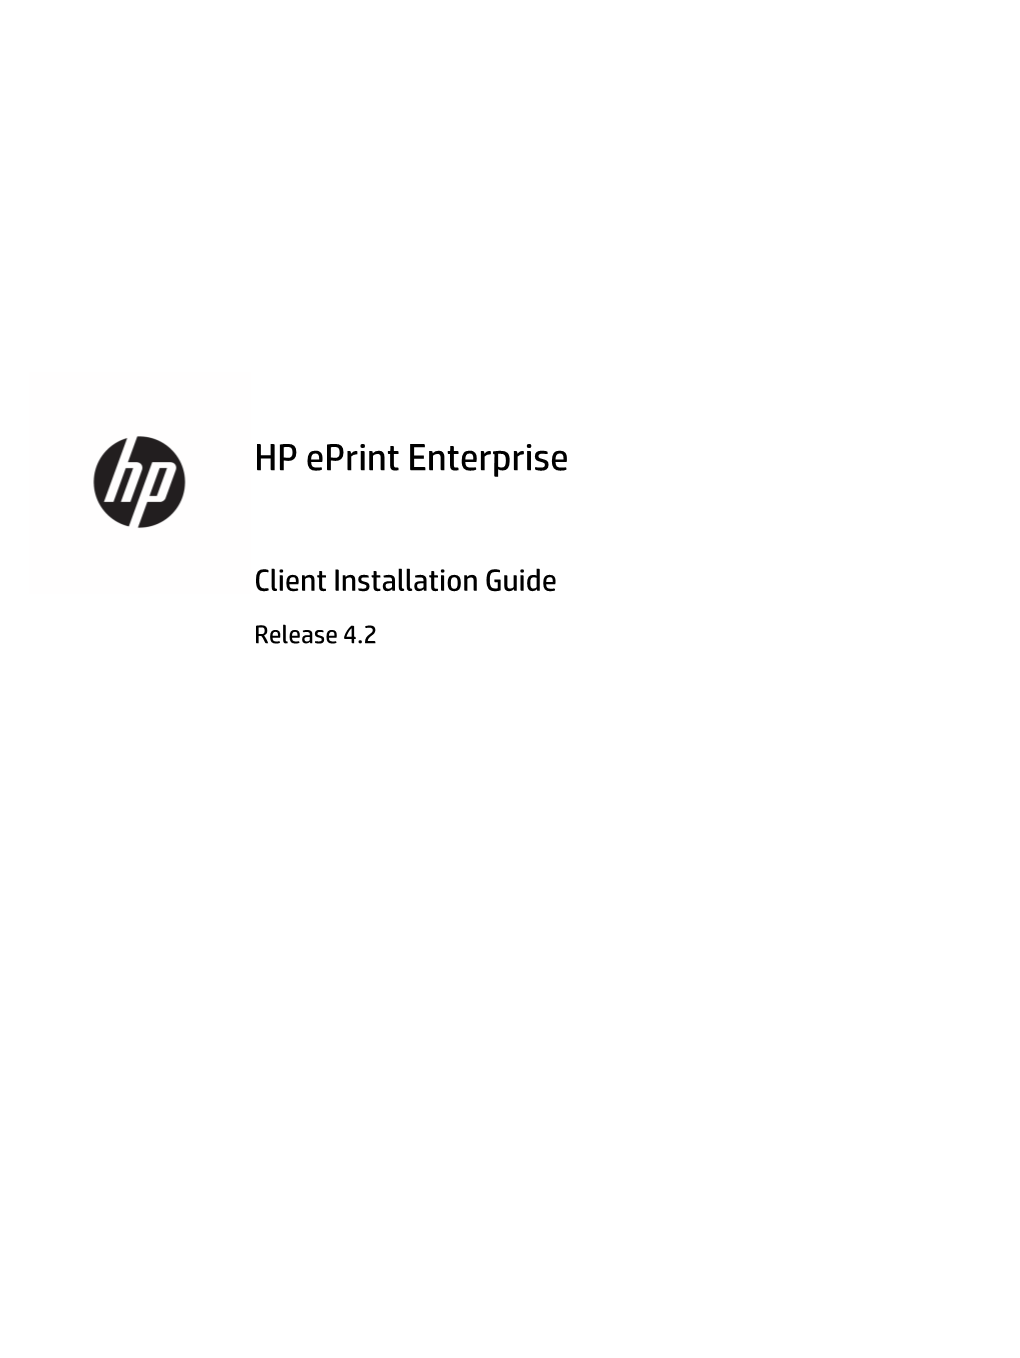 HP Eprint Enterprise Client Installation Guide